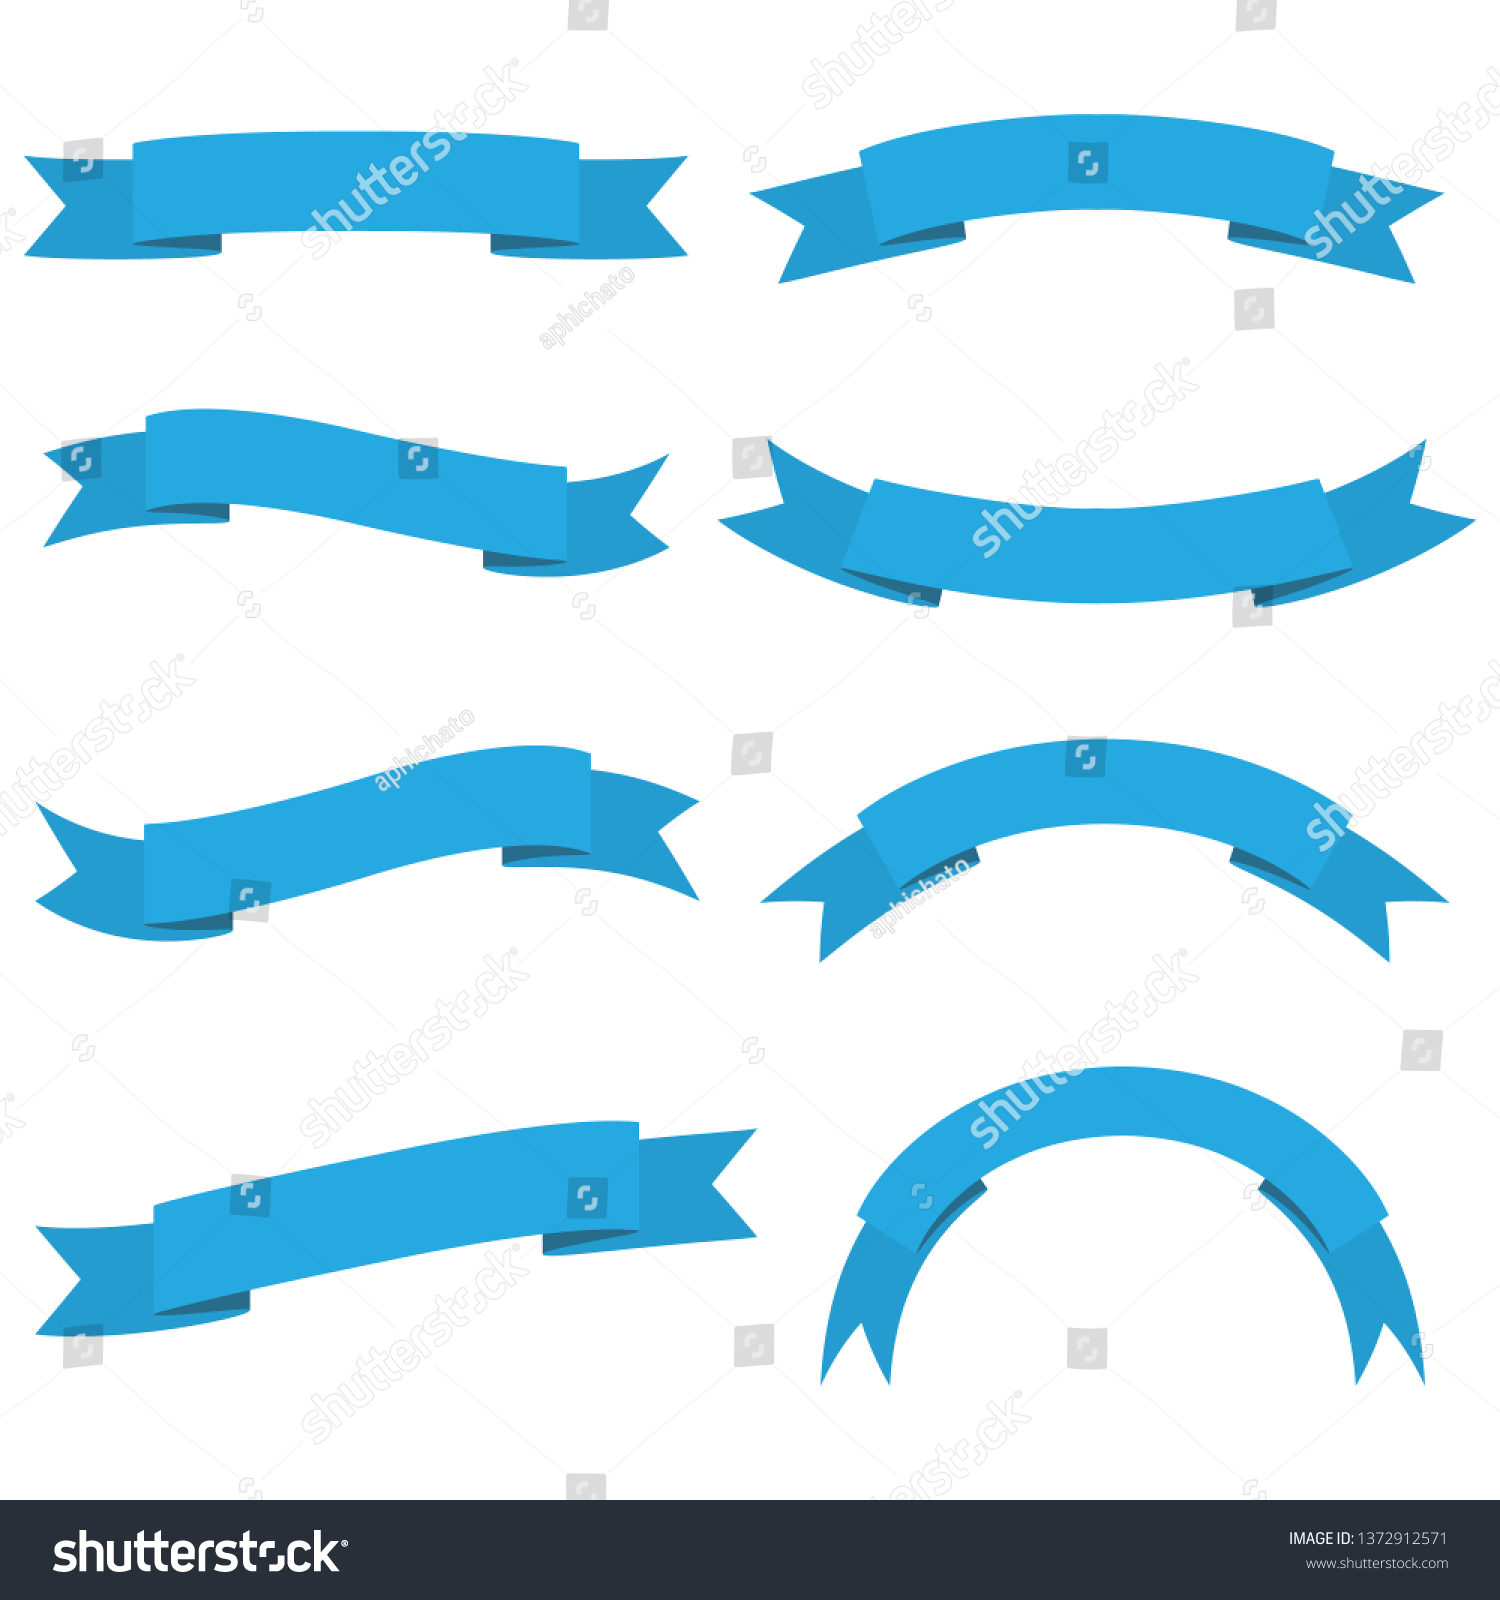 SVG of set of blue ribbon banner icons on white background svg